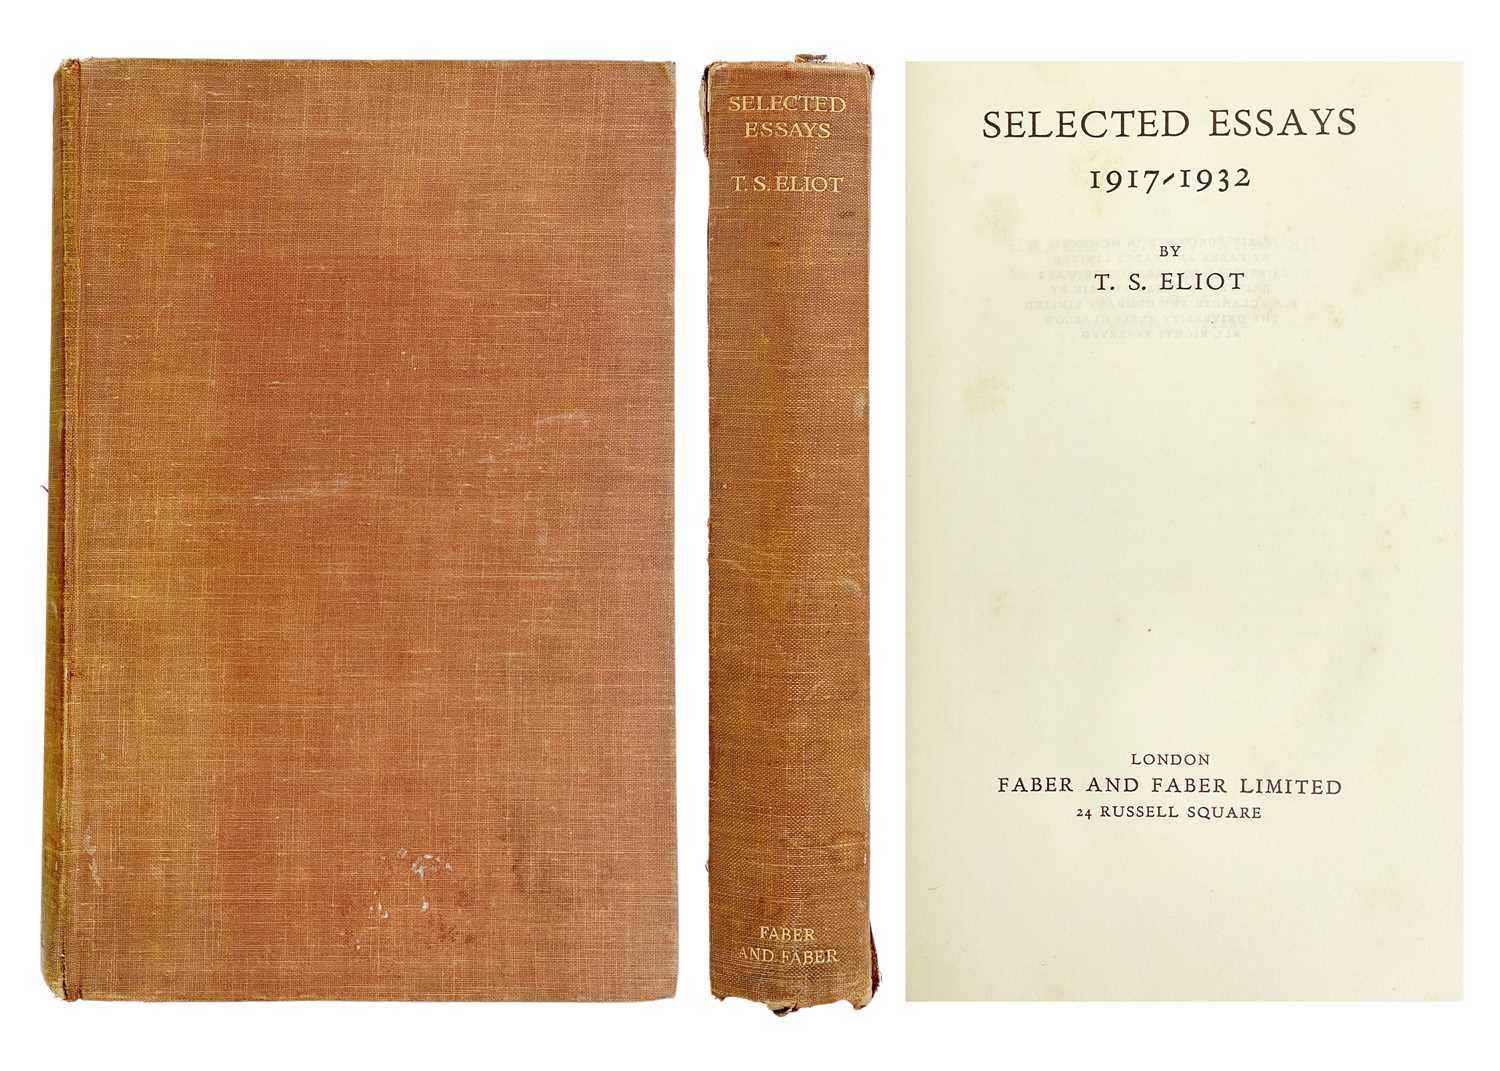 T. S. Eliot. 'Selected Essays 1917-1932,' first edition, lacks dj, original cloth, ink owner